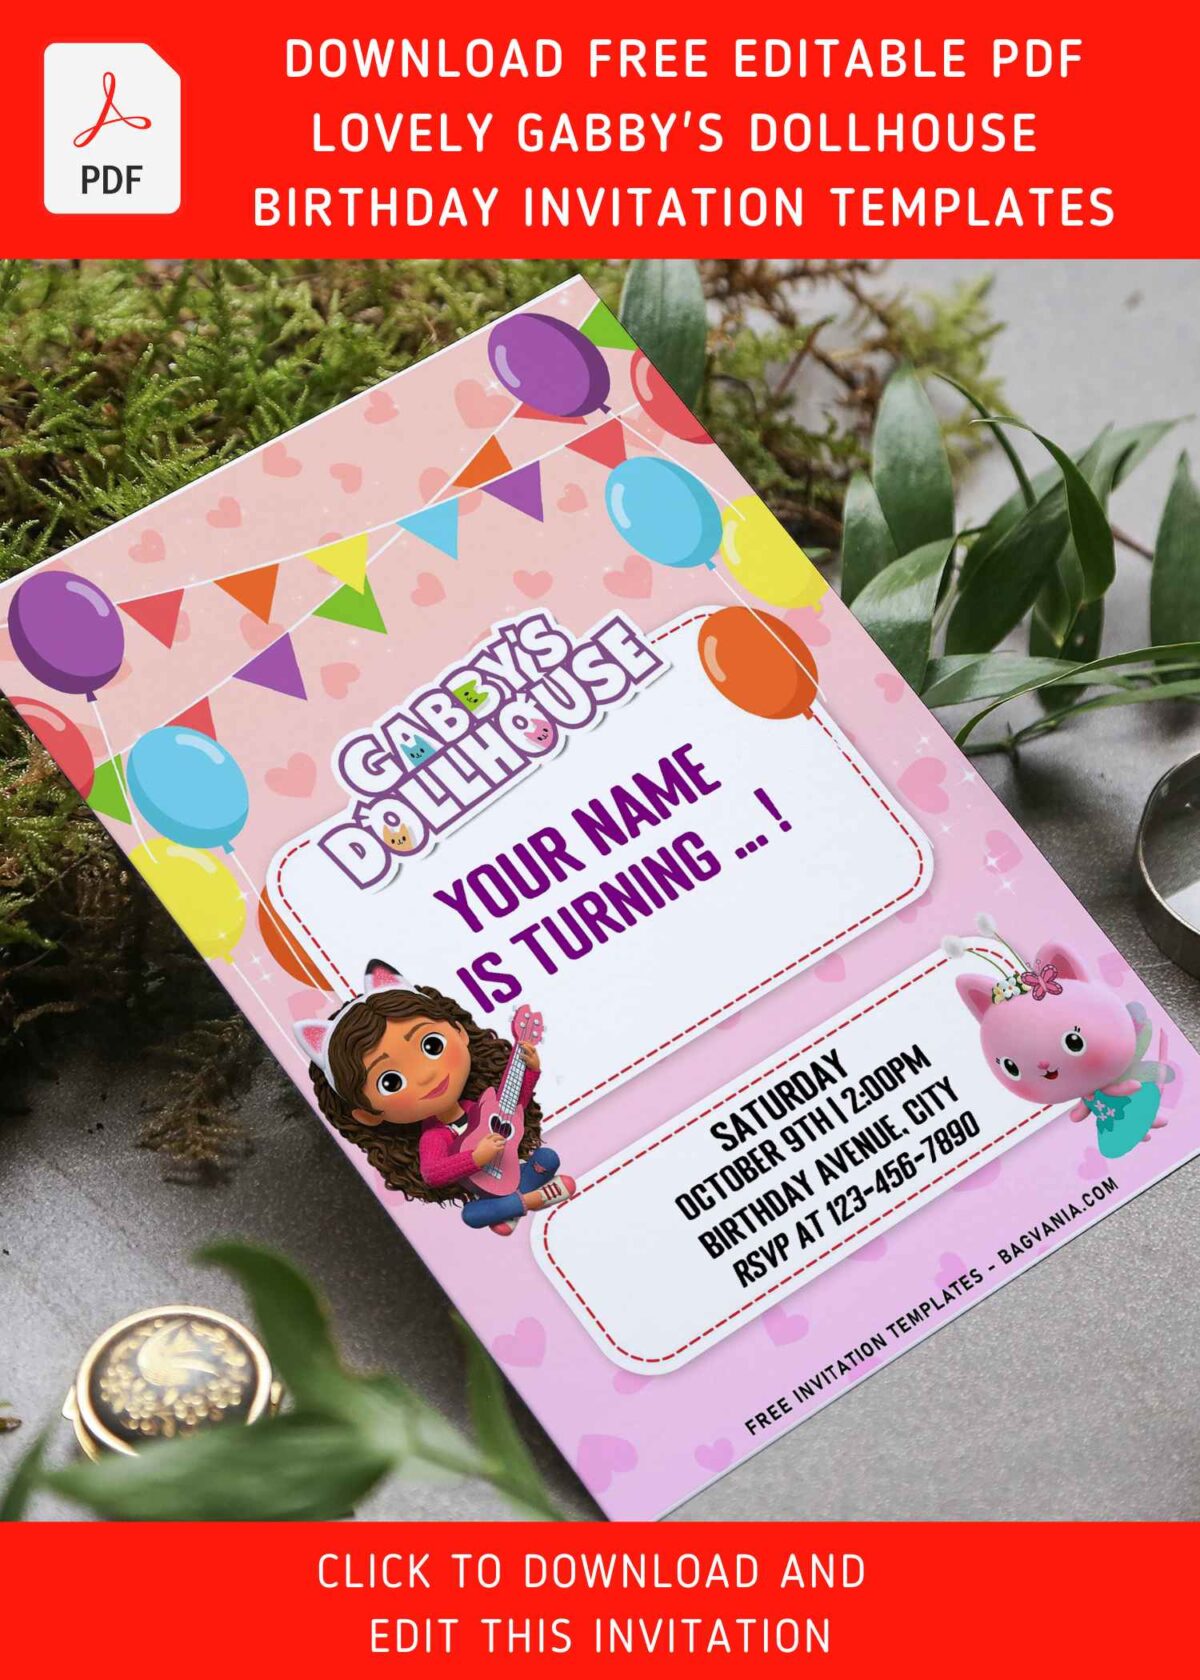 (Free Editable PDF) Purr-fect Gabby's Dollhouse Birthday Invitation Templates with Catrat